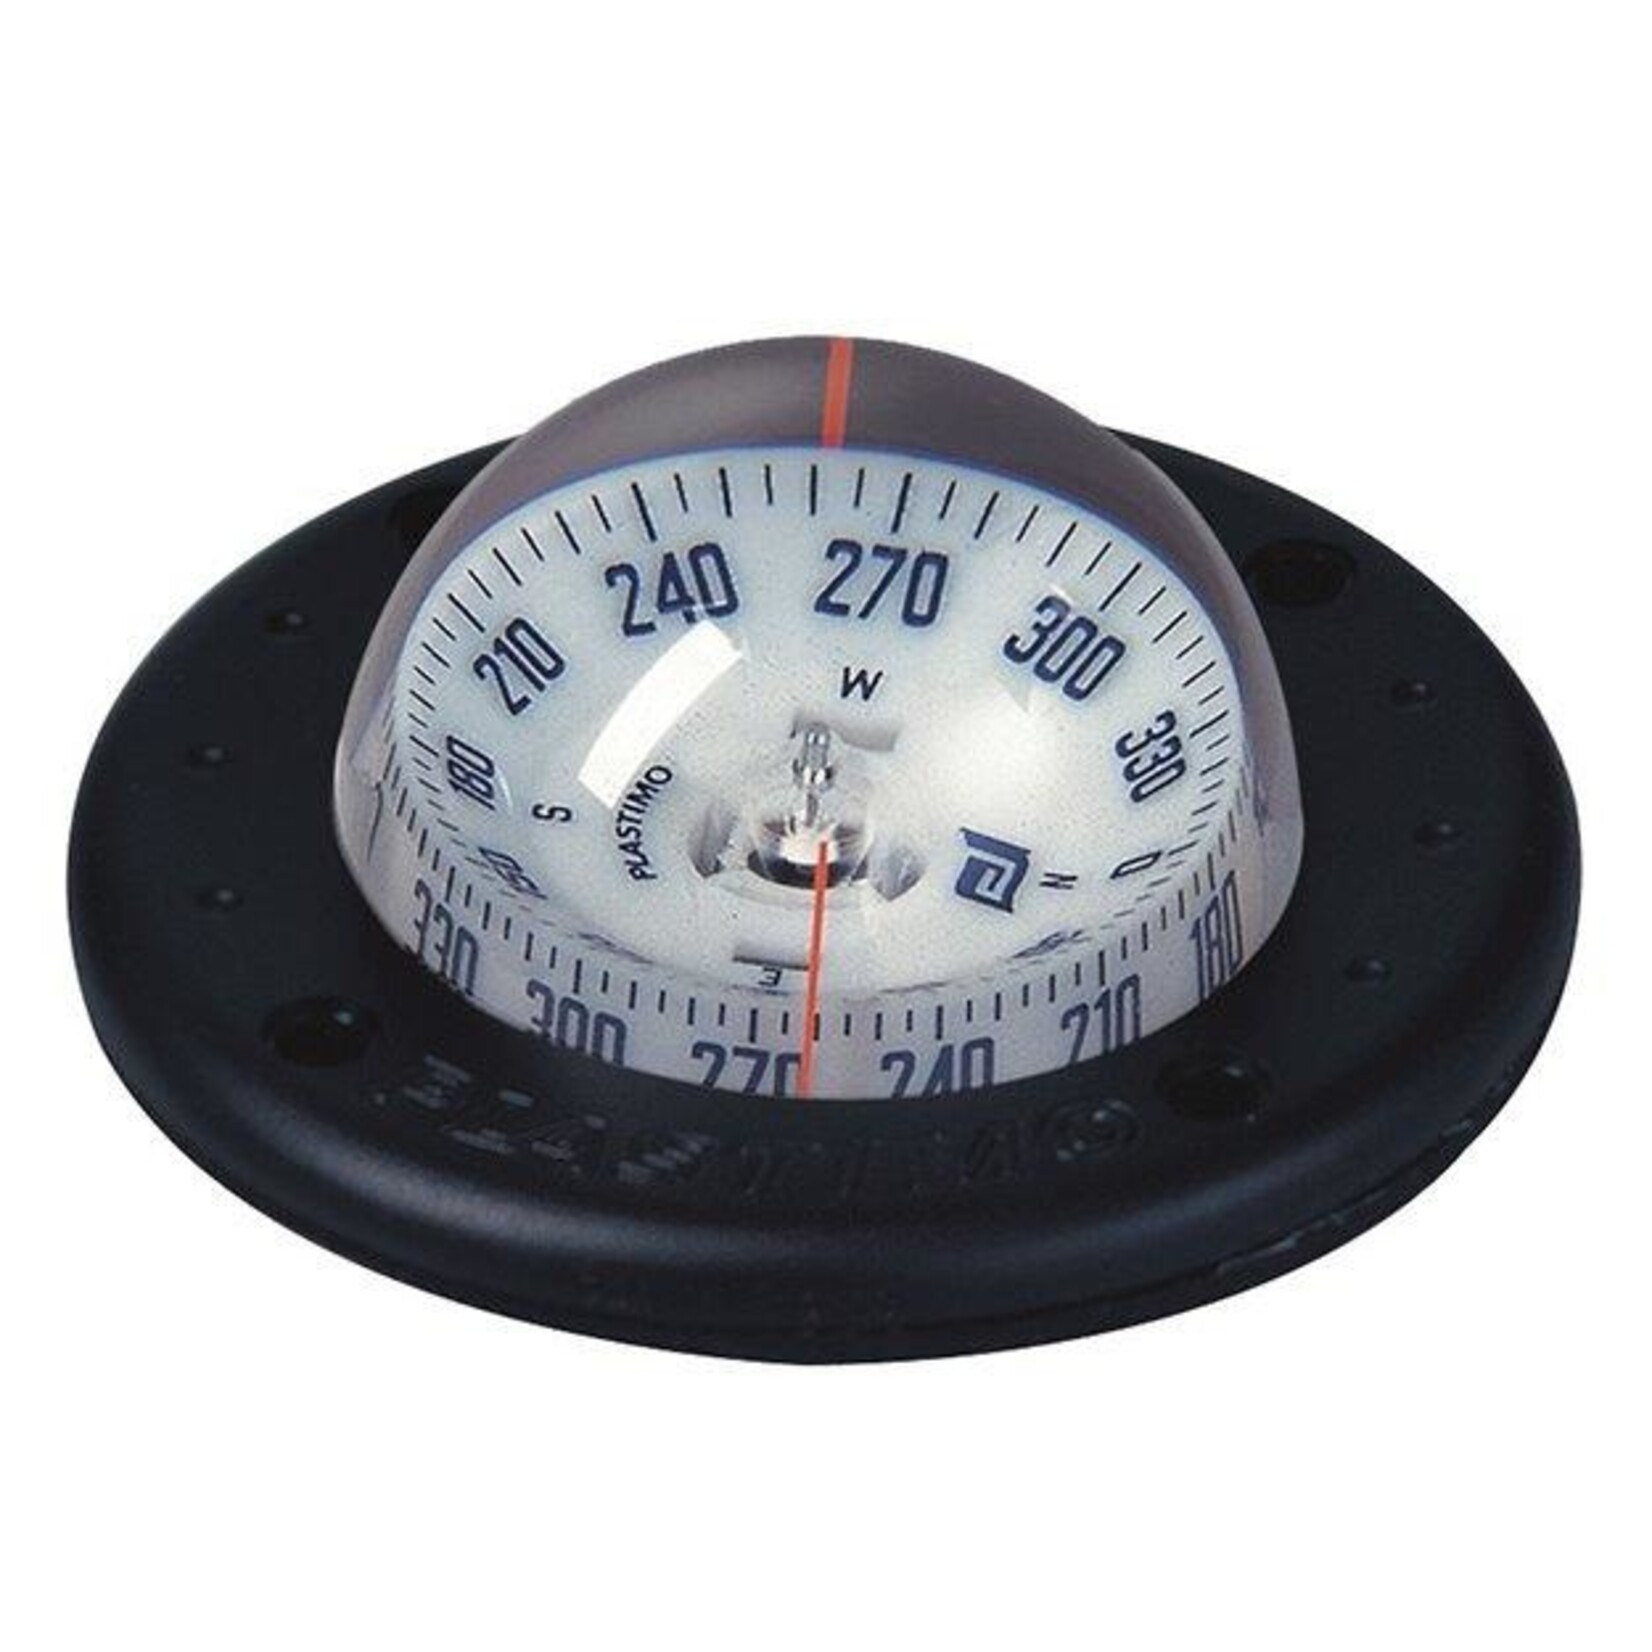 Plastimo Compass mini-c black z/abc